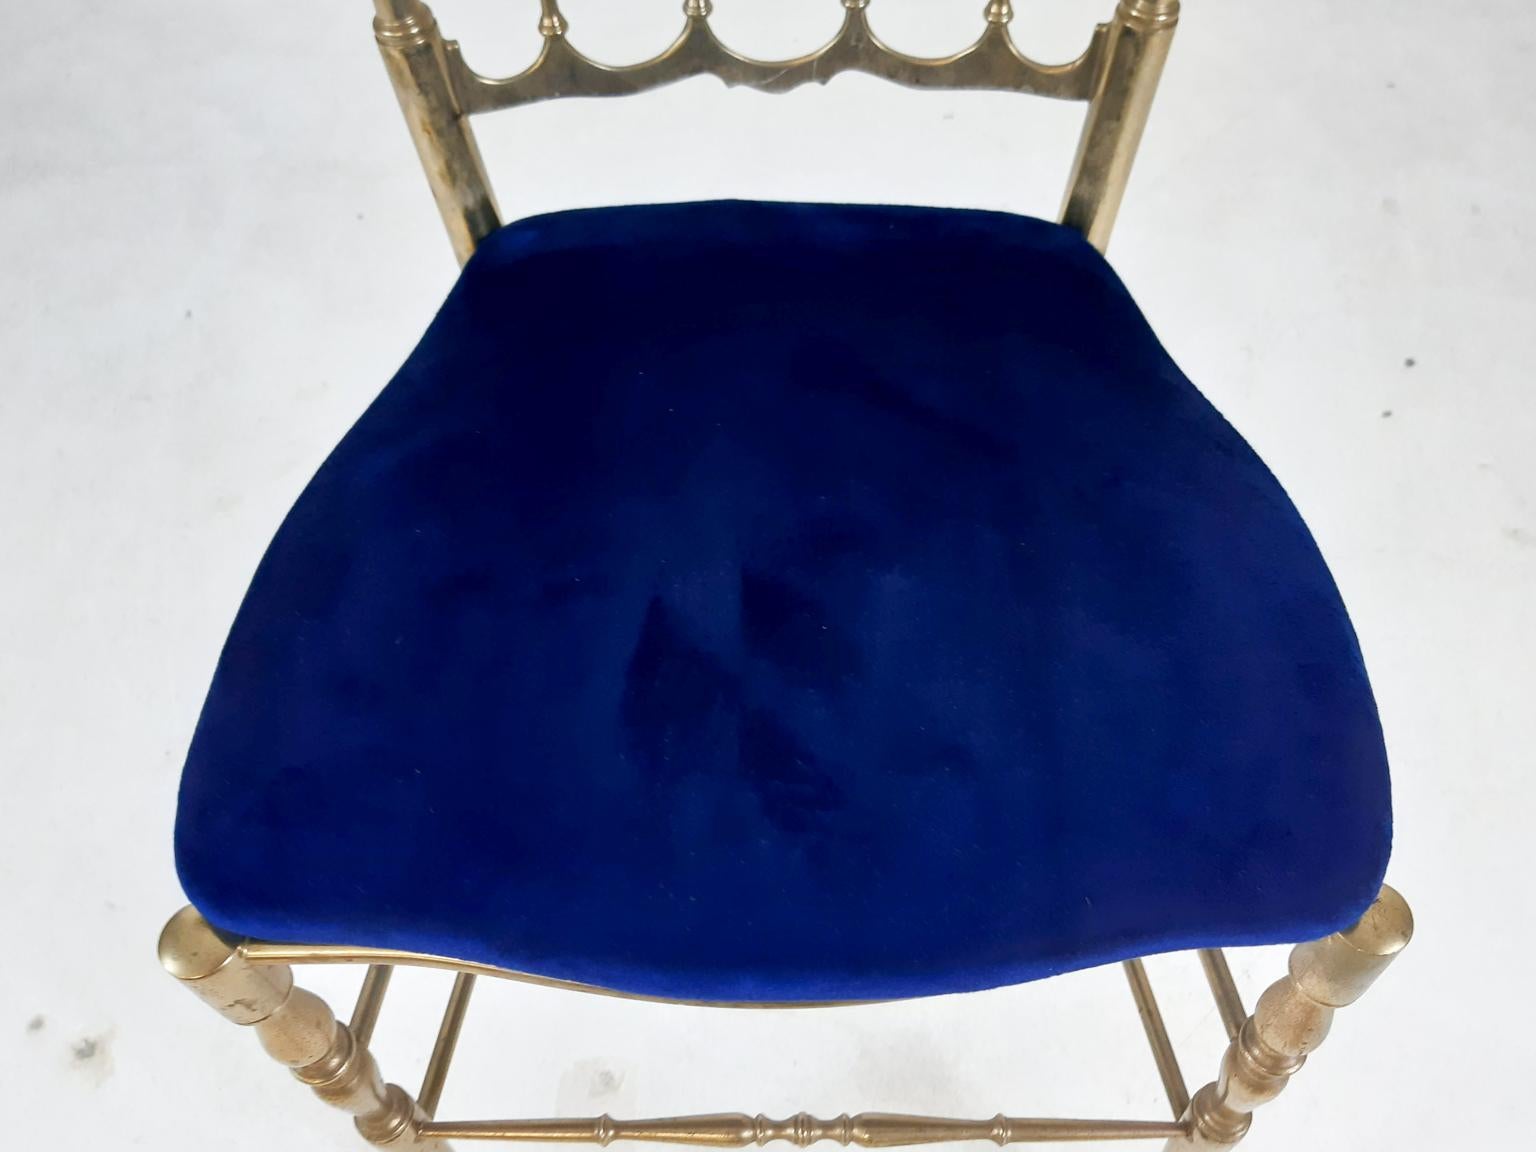 20th Century Brass Dining Chair by Giuseppe Gaetano Descalzi for Chiavari, Italy, 1950s